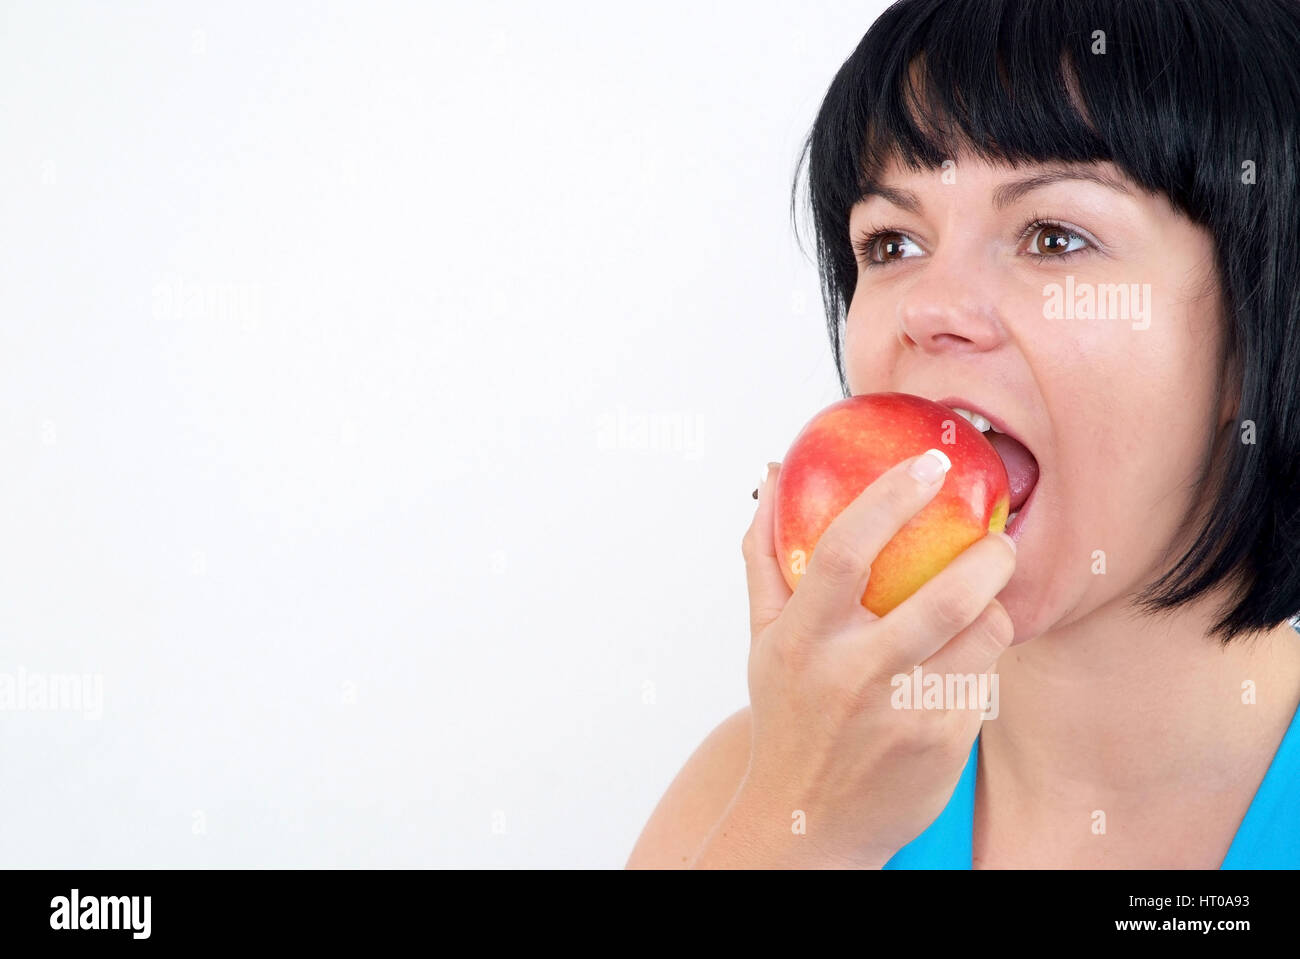 Frau isst Apfel - woman eats apple Stock Photo